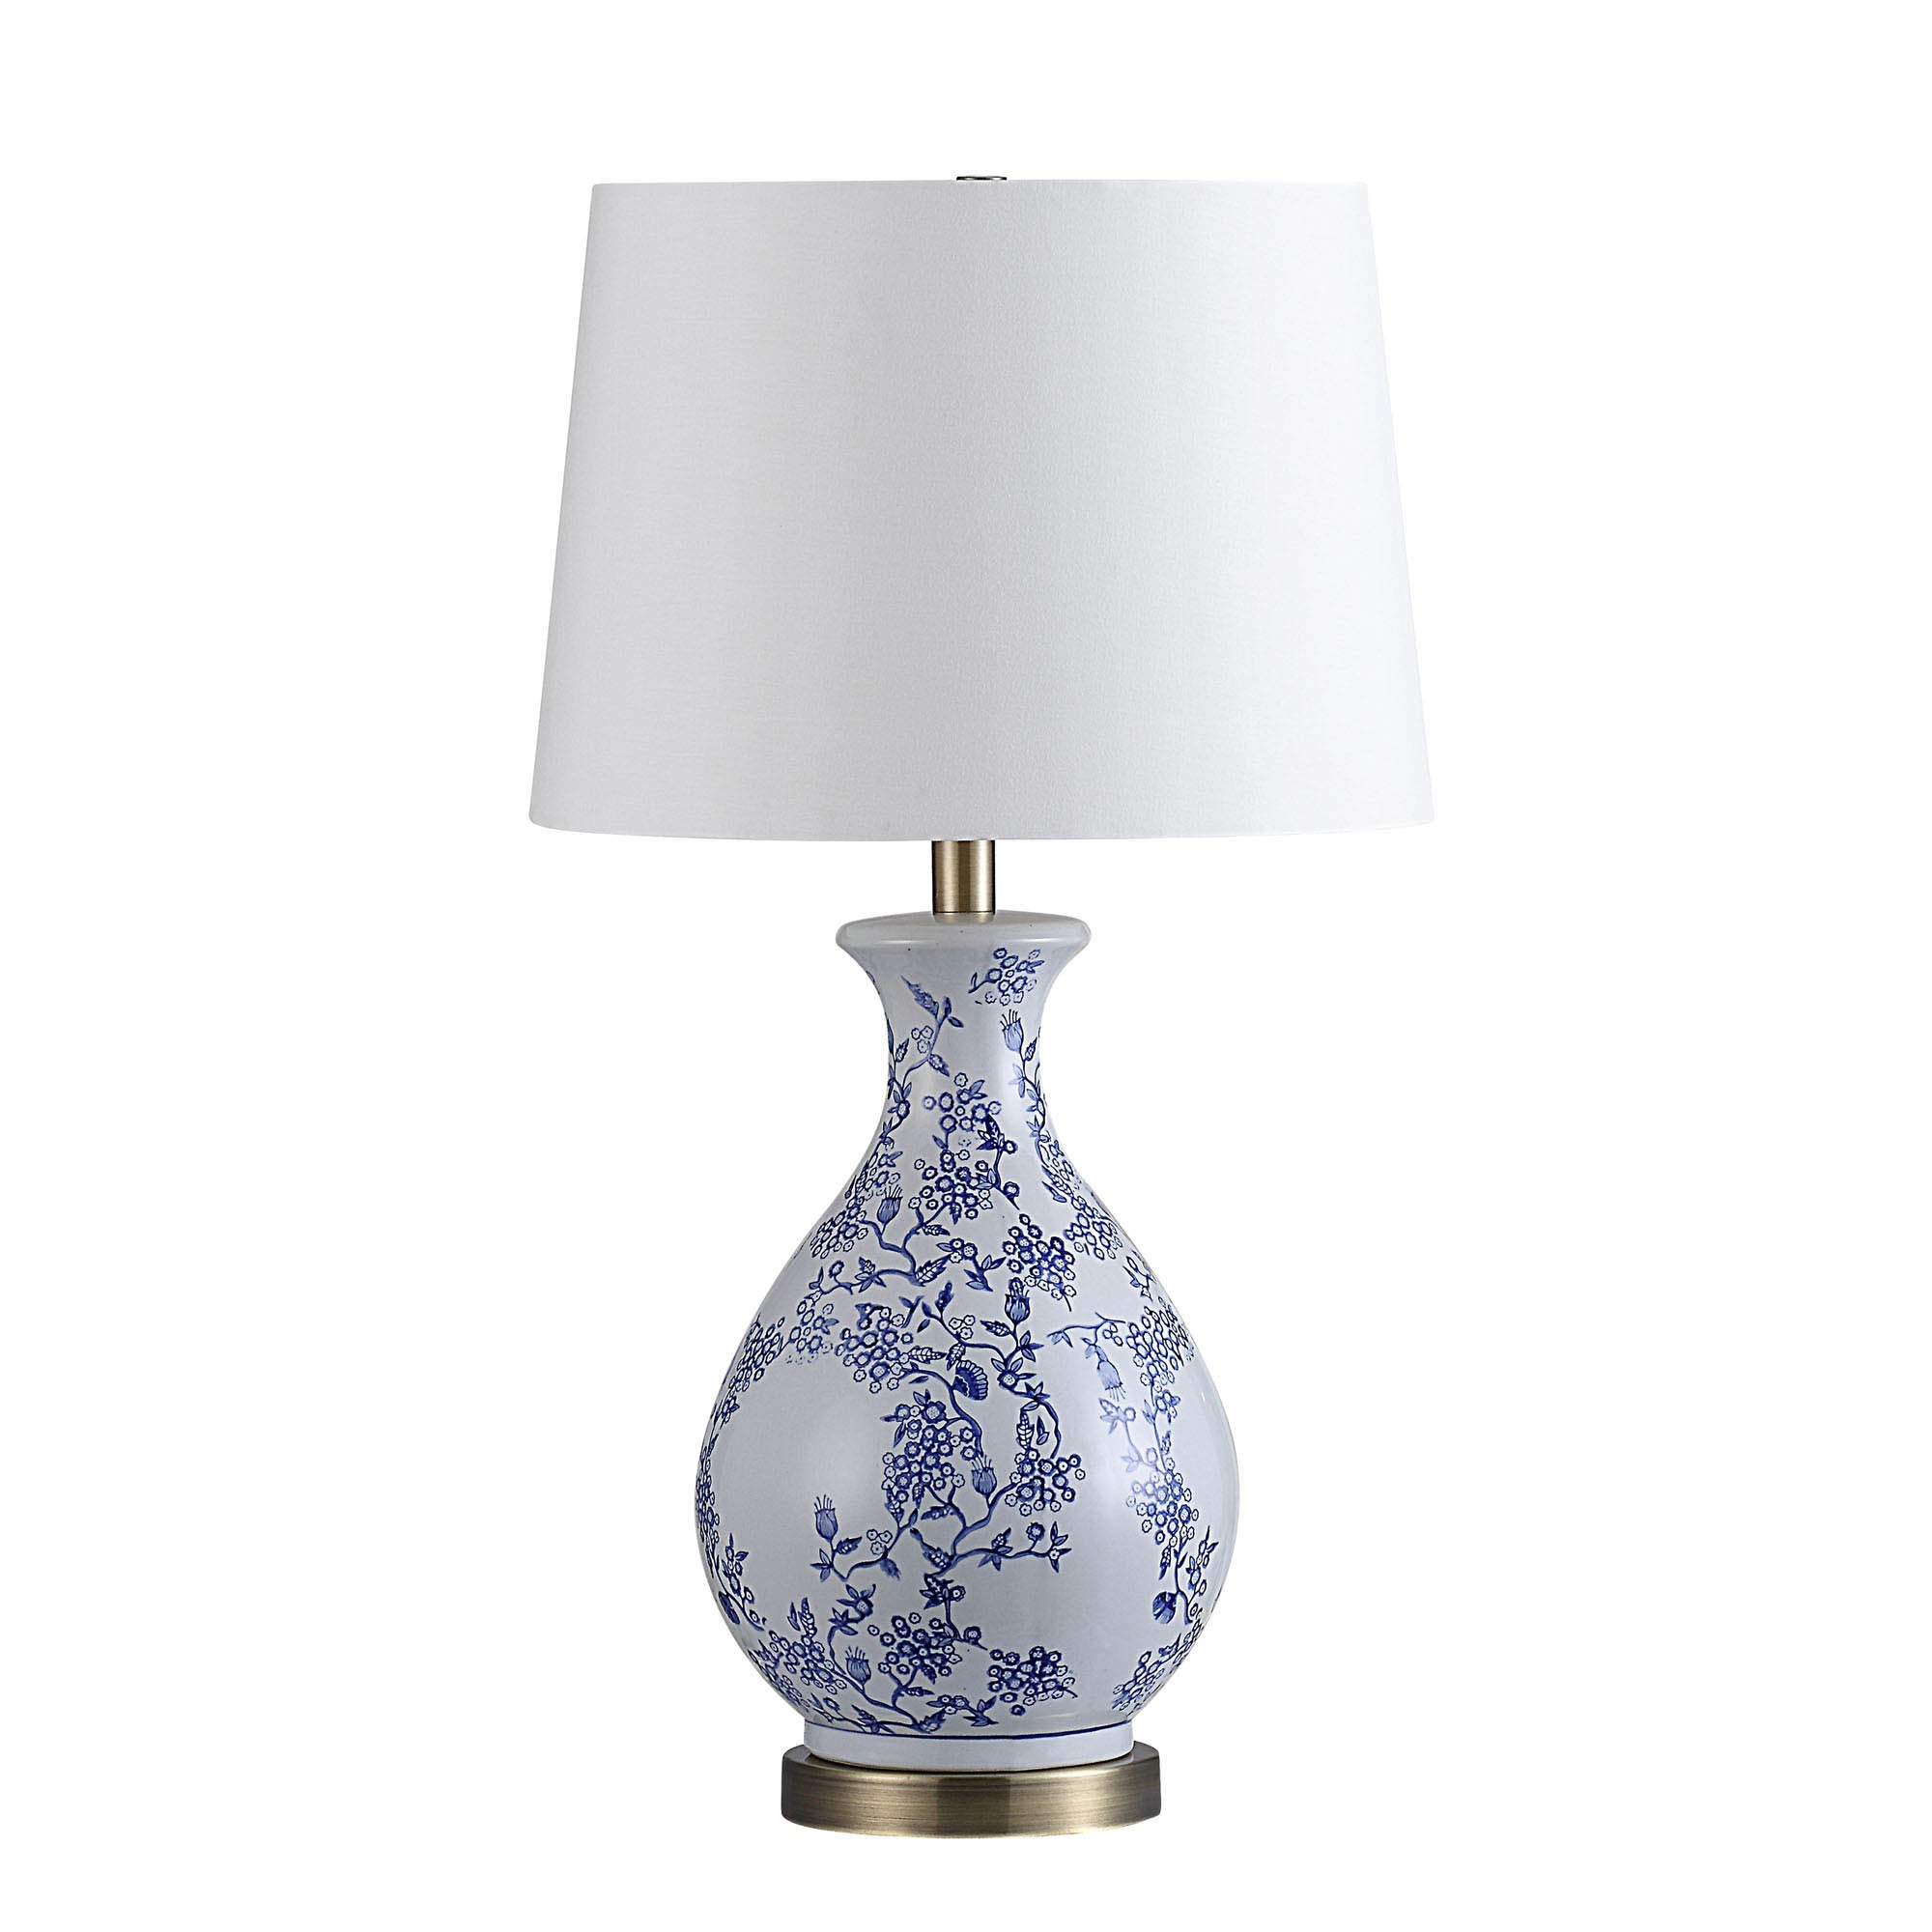 Renwil - ISANDO Table Lamp - LPT1245 - White